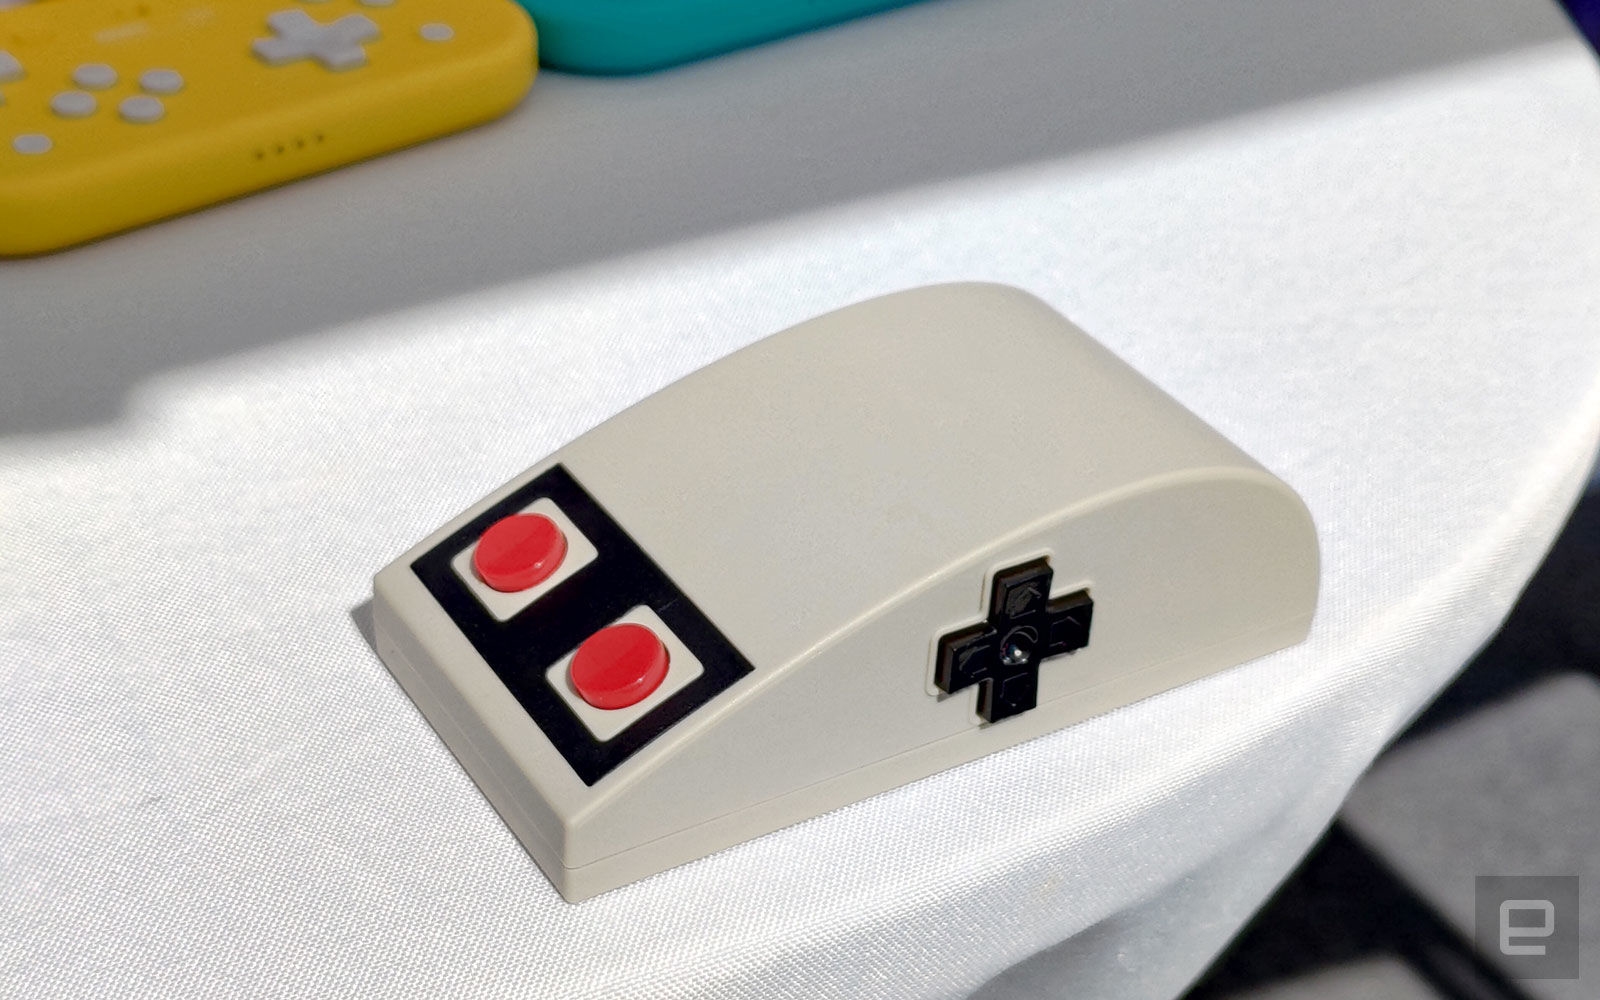 8BitDo turns the NES gamepad into a mouse | DeviceDaily.com